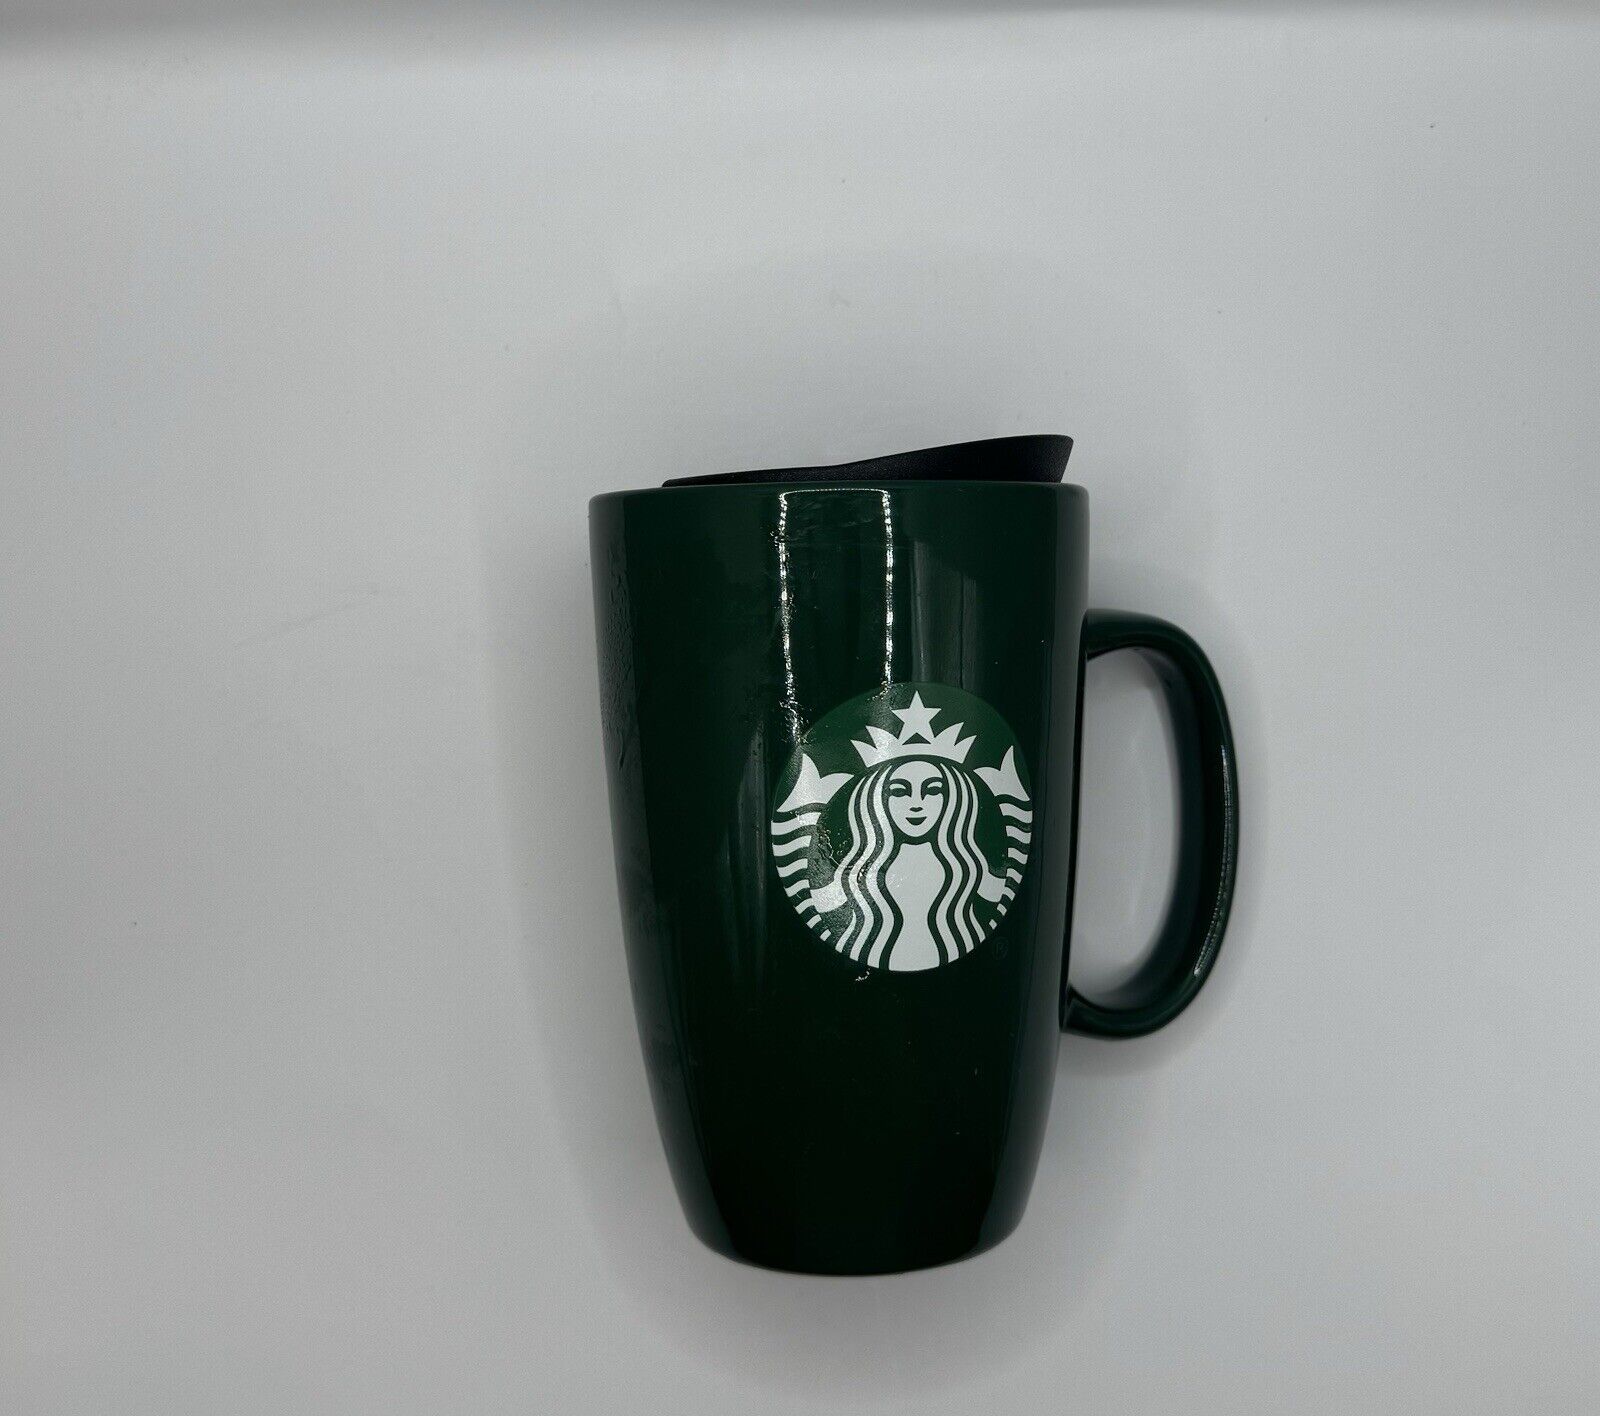 Starbucks Green Ceramic Travel Mug 12 oz